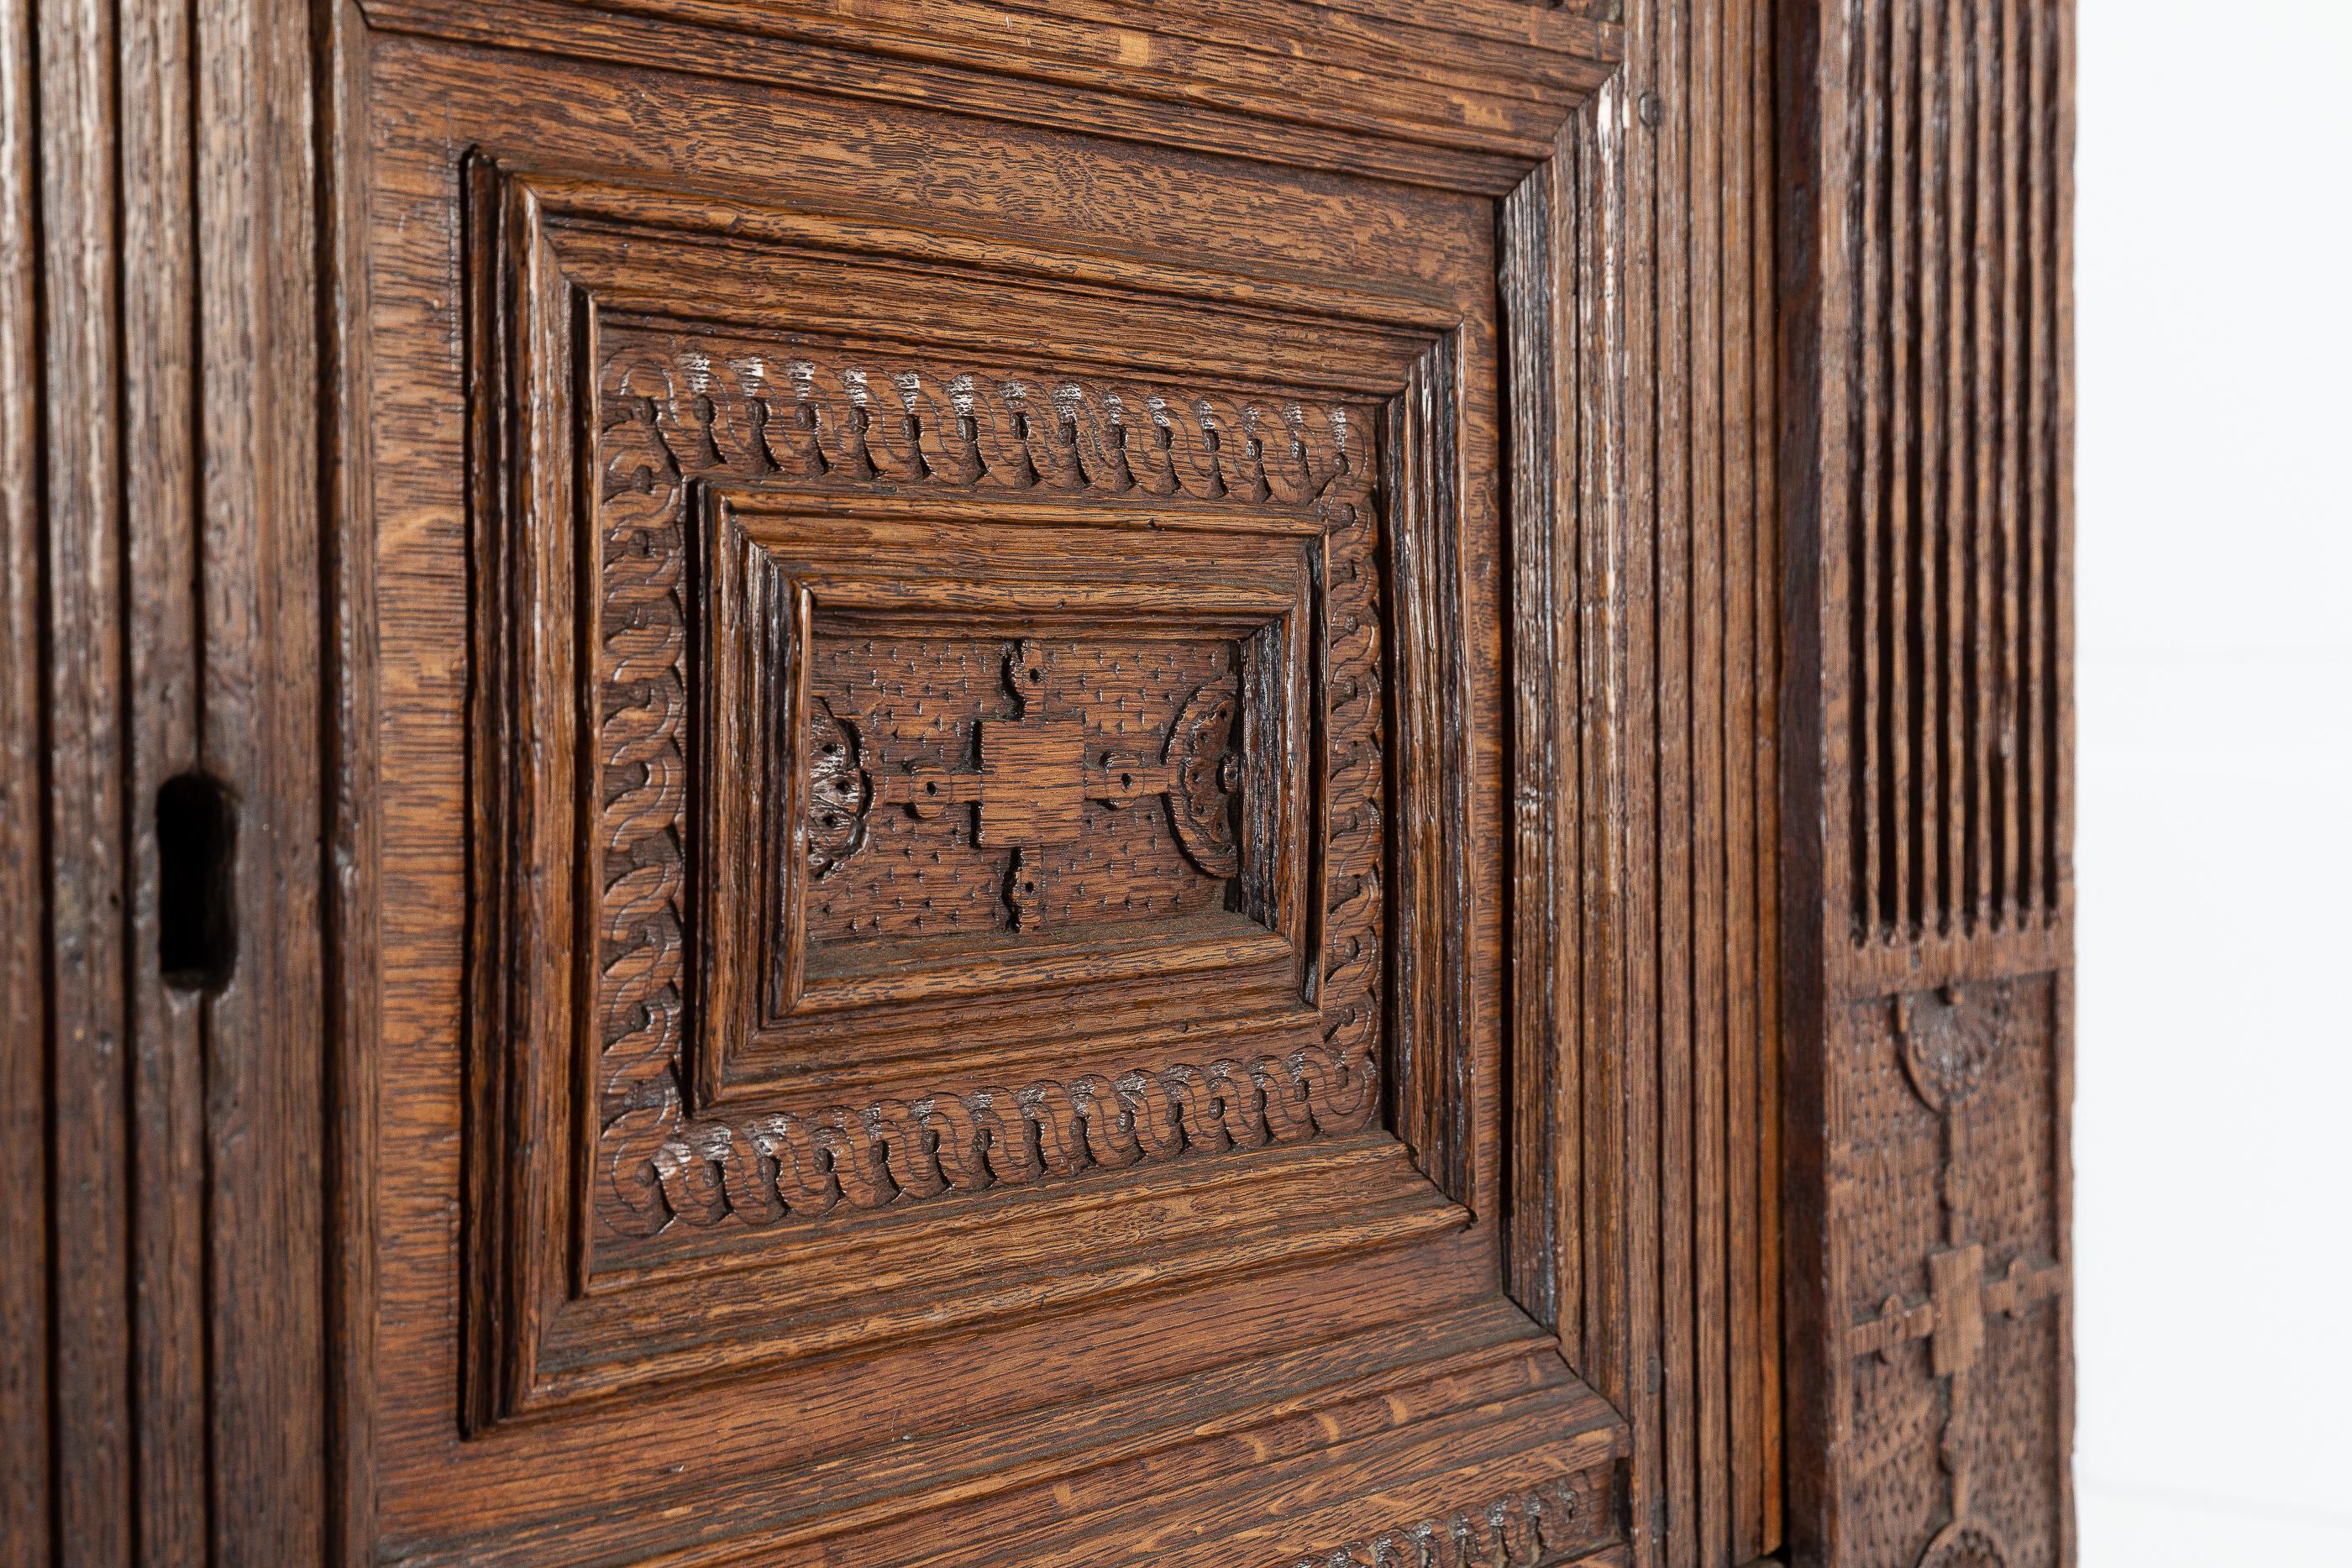 Carved 17th Century Dutch Renaissance Period Cabinet